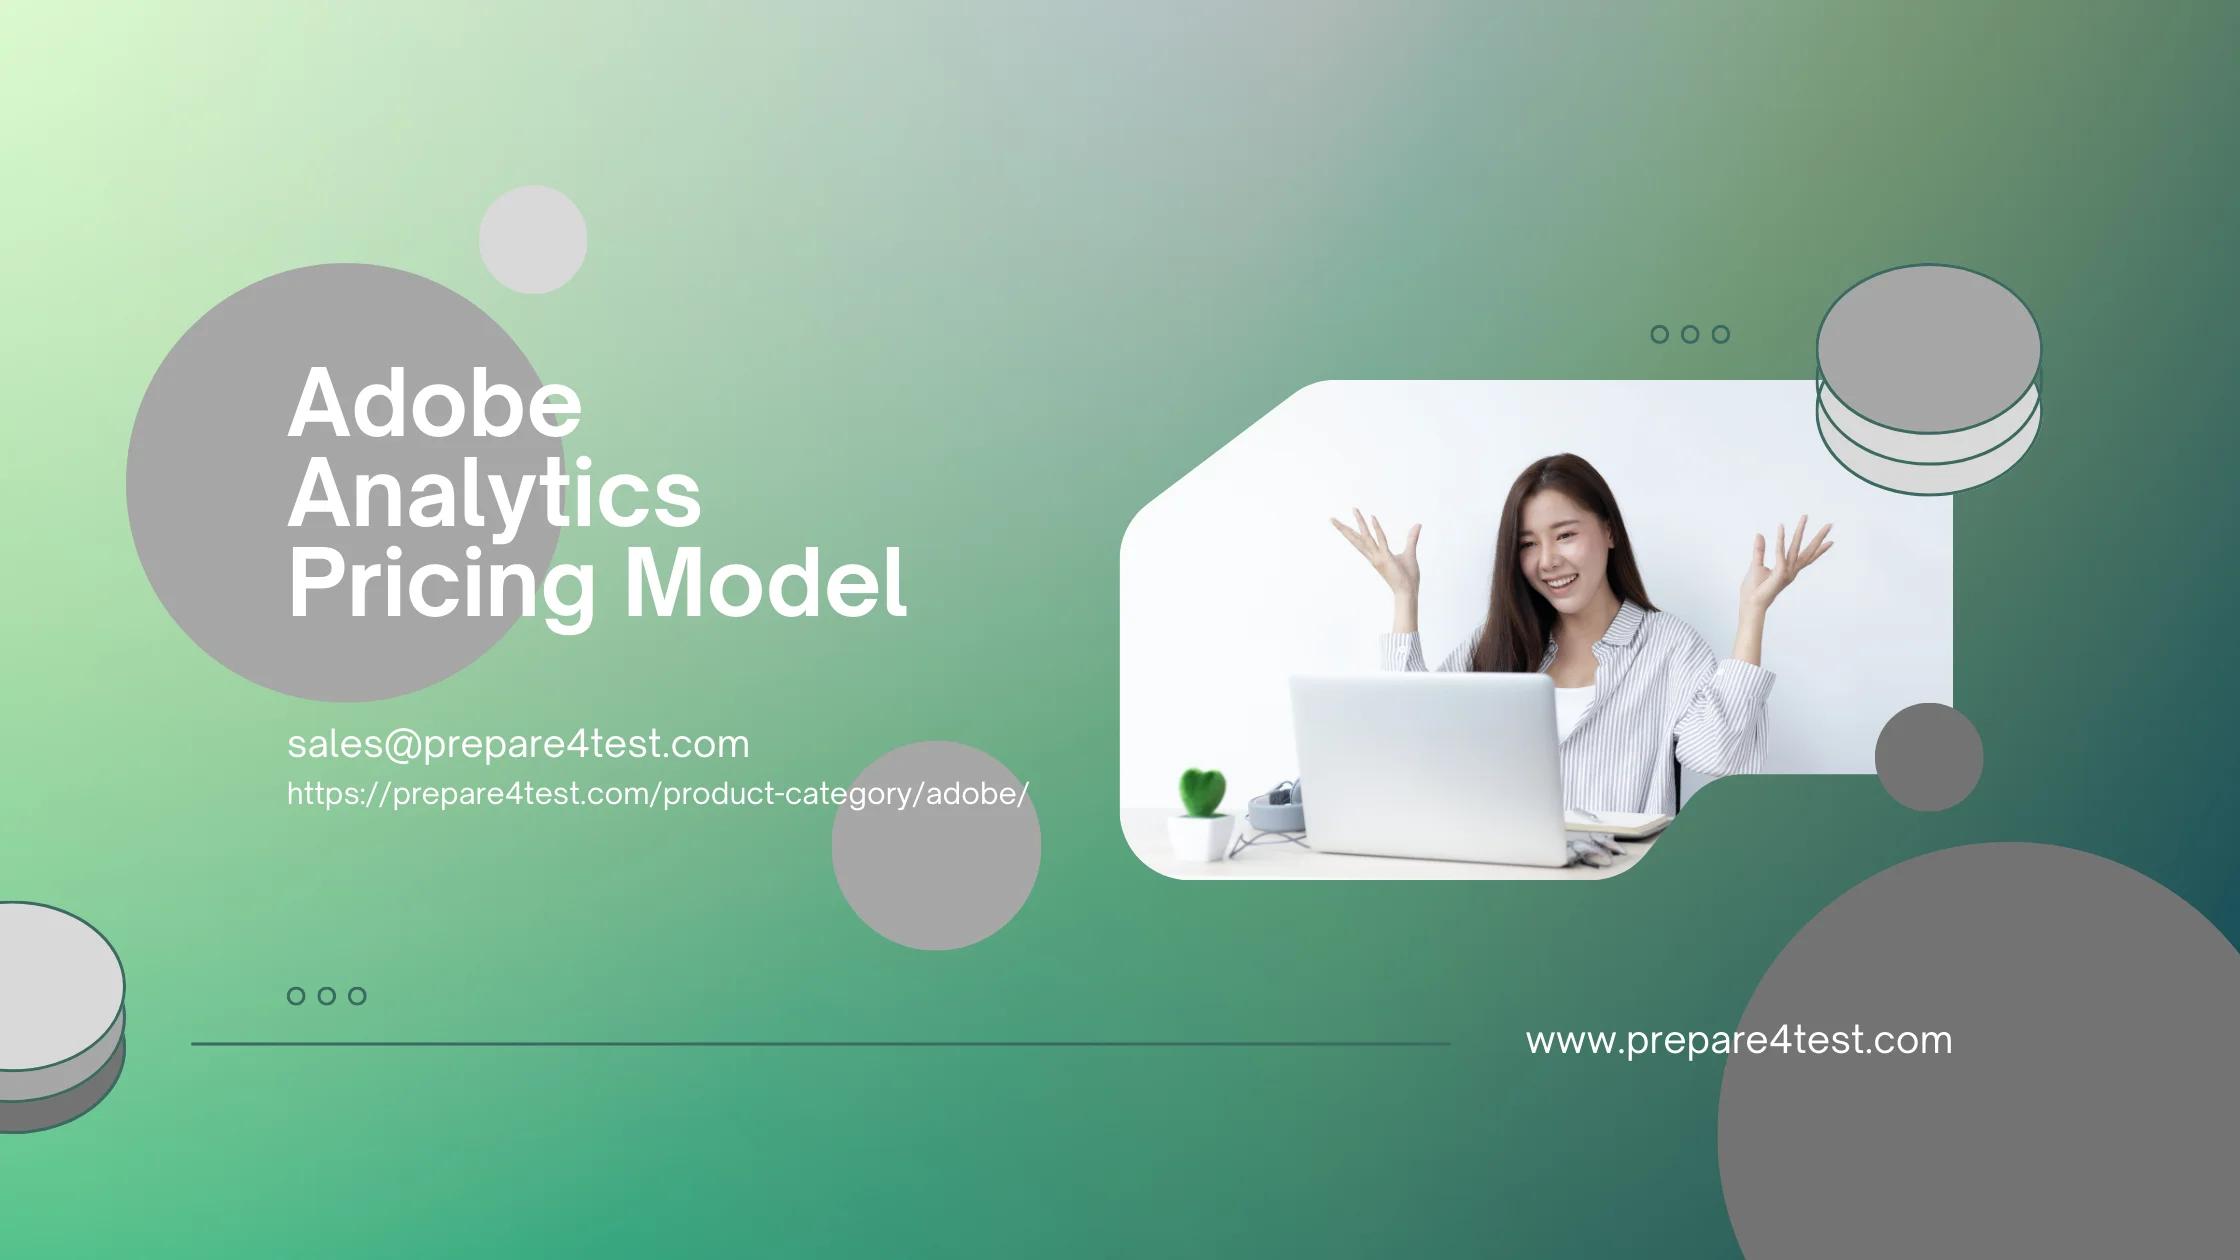 Adobe Analytics Pricing Model success